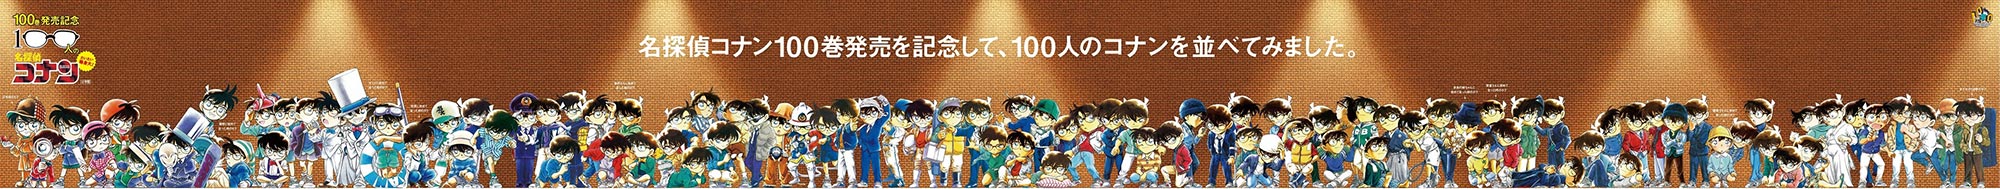 『名探偵コナン』100巻発売記念企画_渋谷駅巨大広告